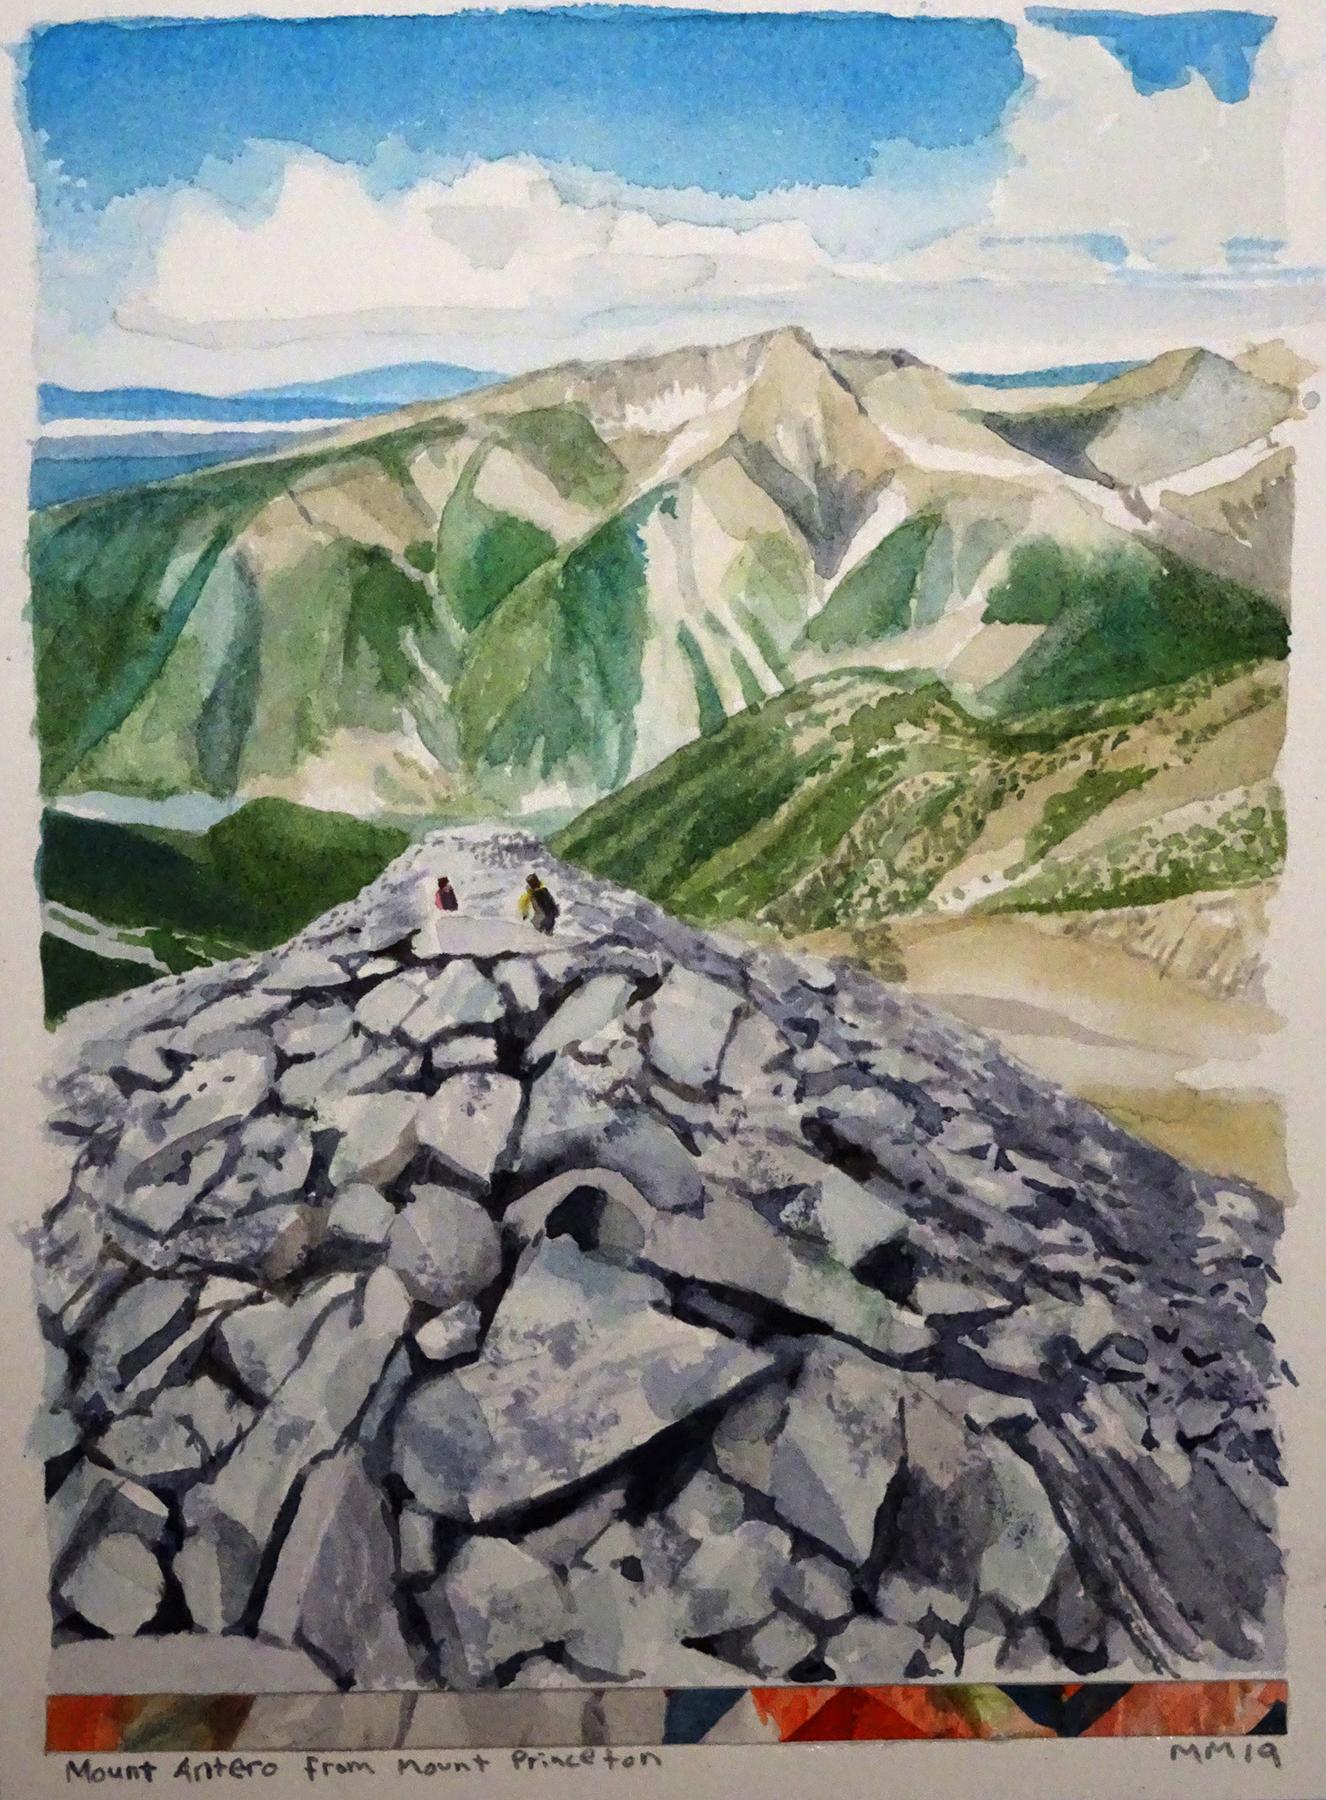 Matthew Mullins Landscape Art - Mount Antero from Mount Princeton